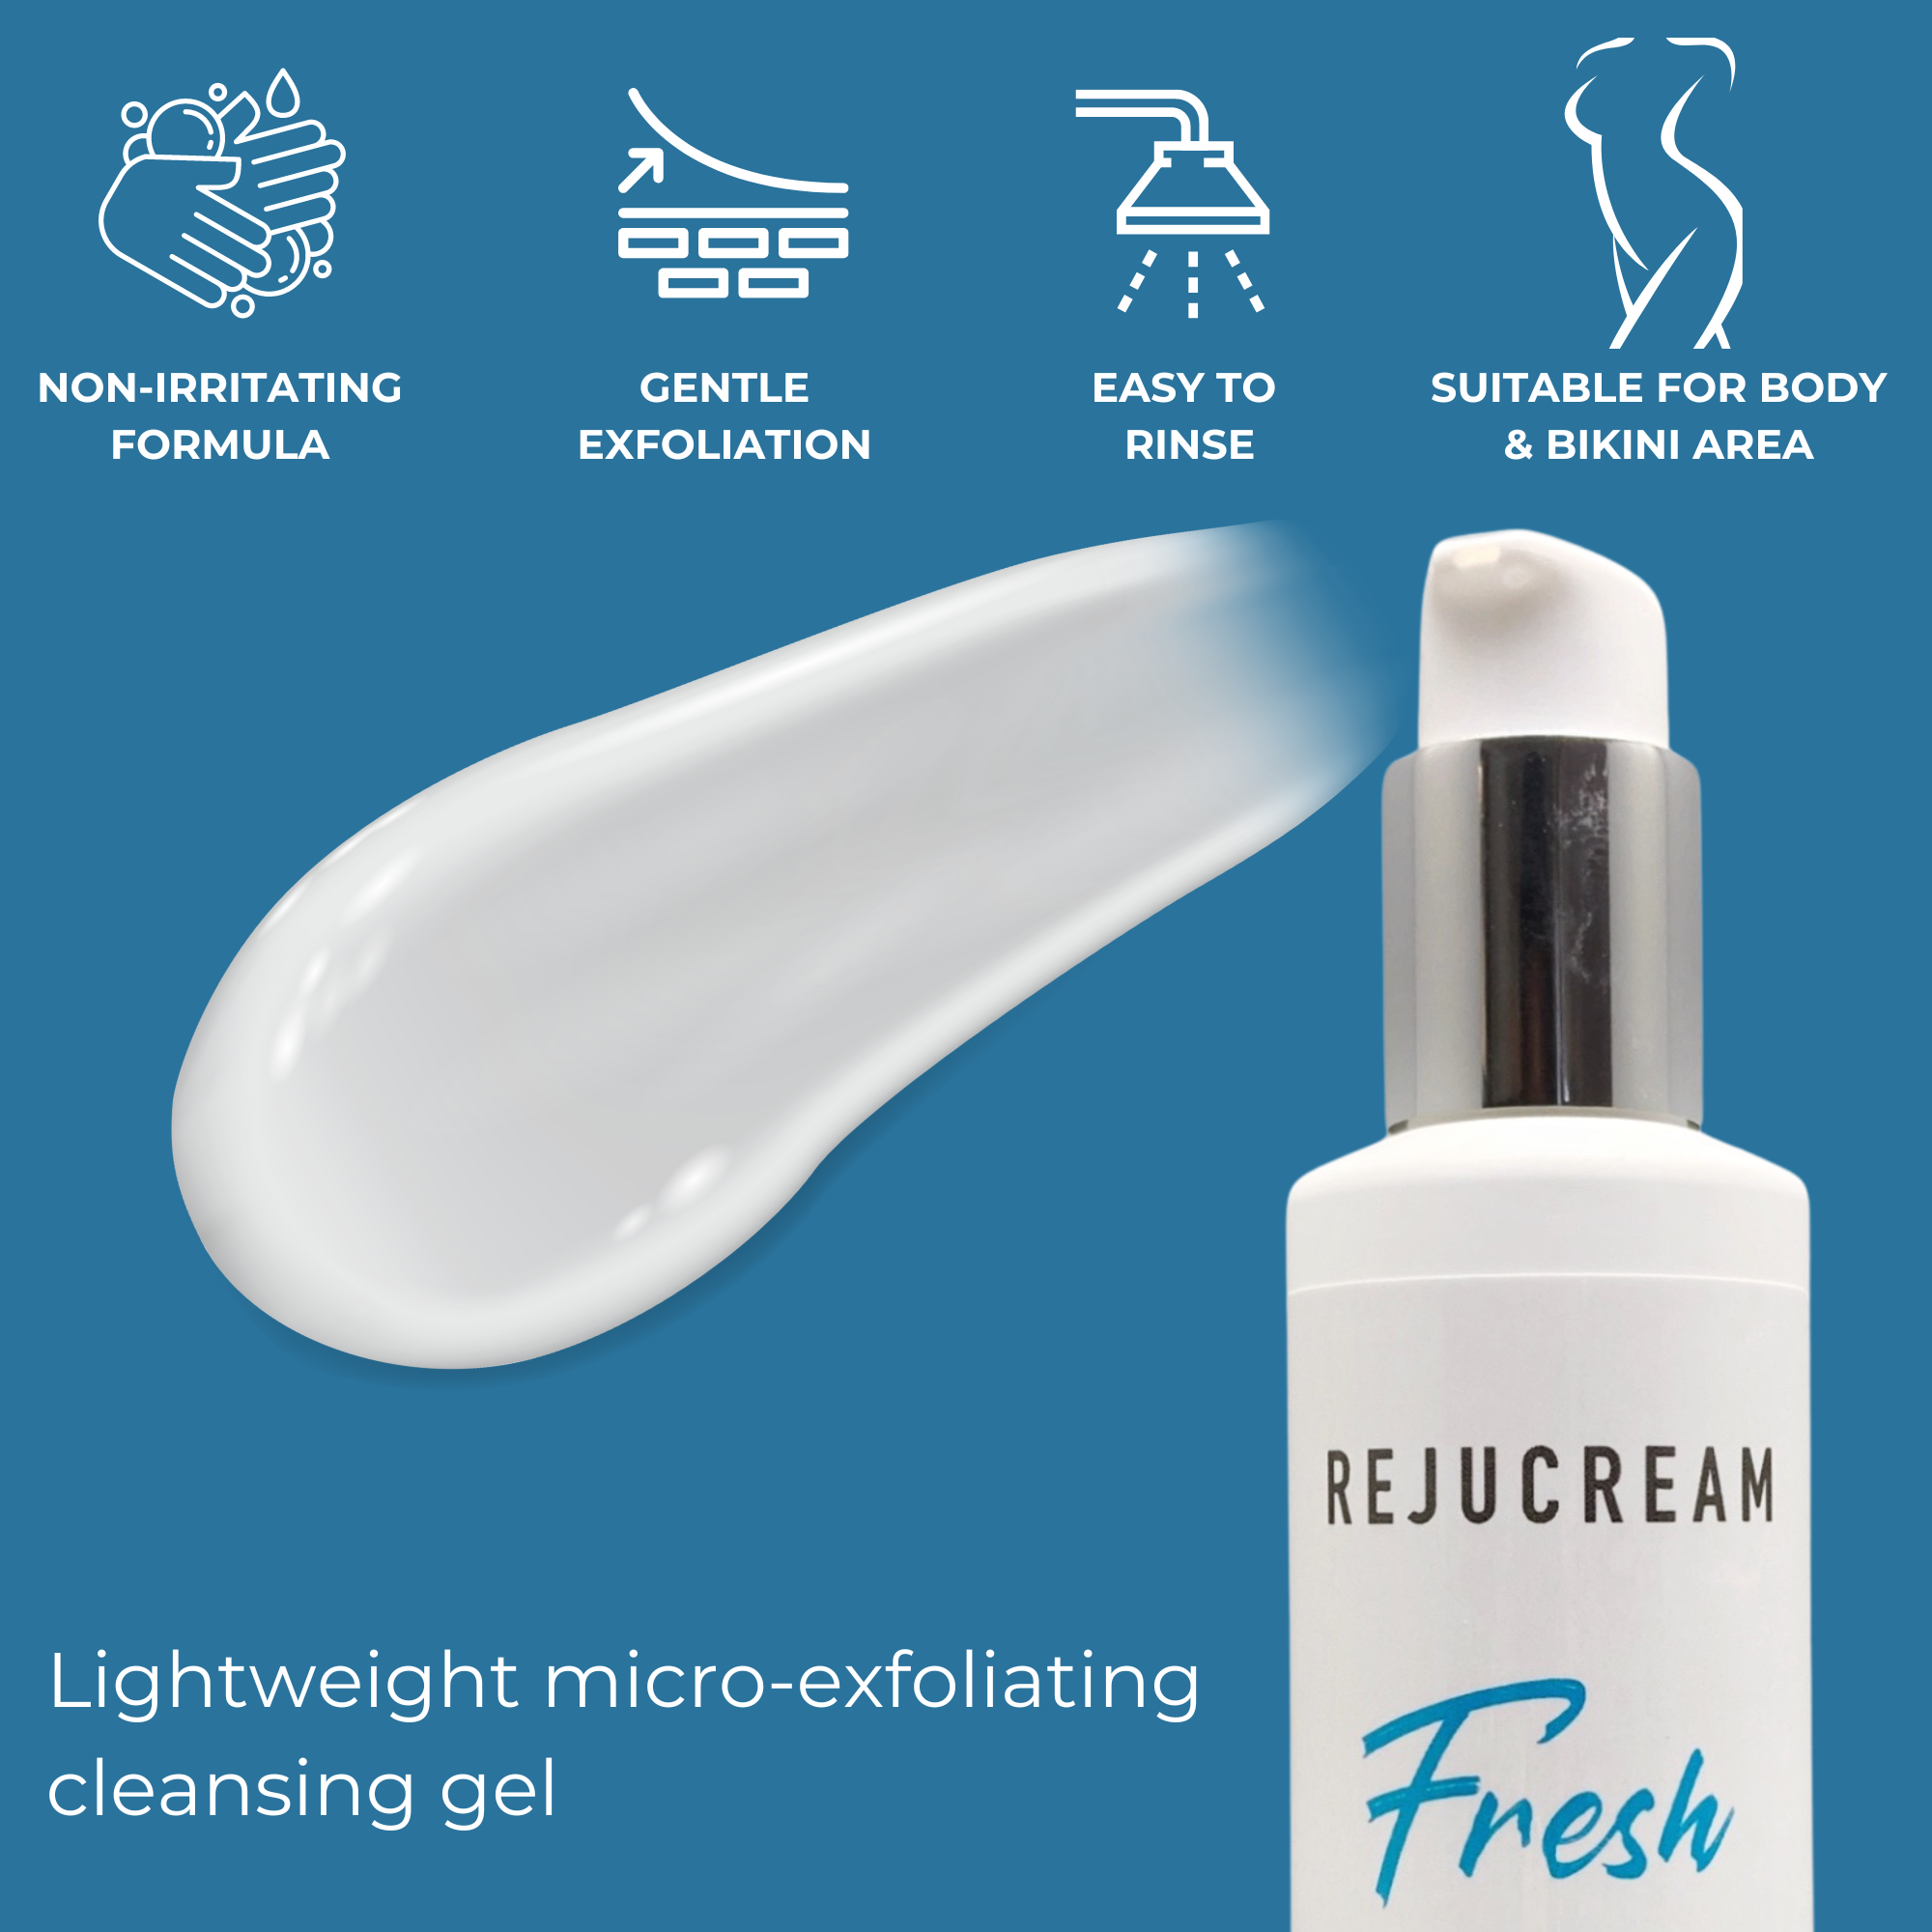 key benefits of rejuvenate intimate revitalizing cream include nourishing, hydrating, plumping and tightening the vulva